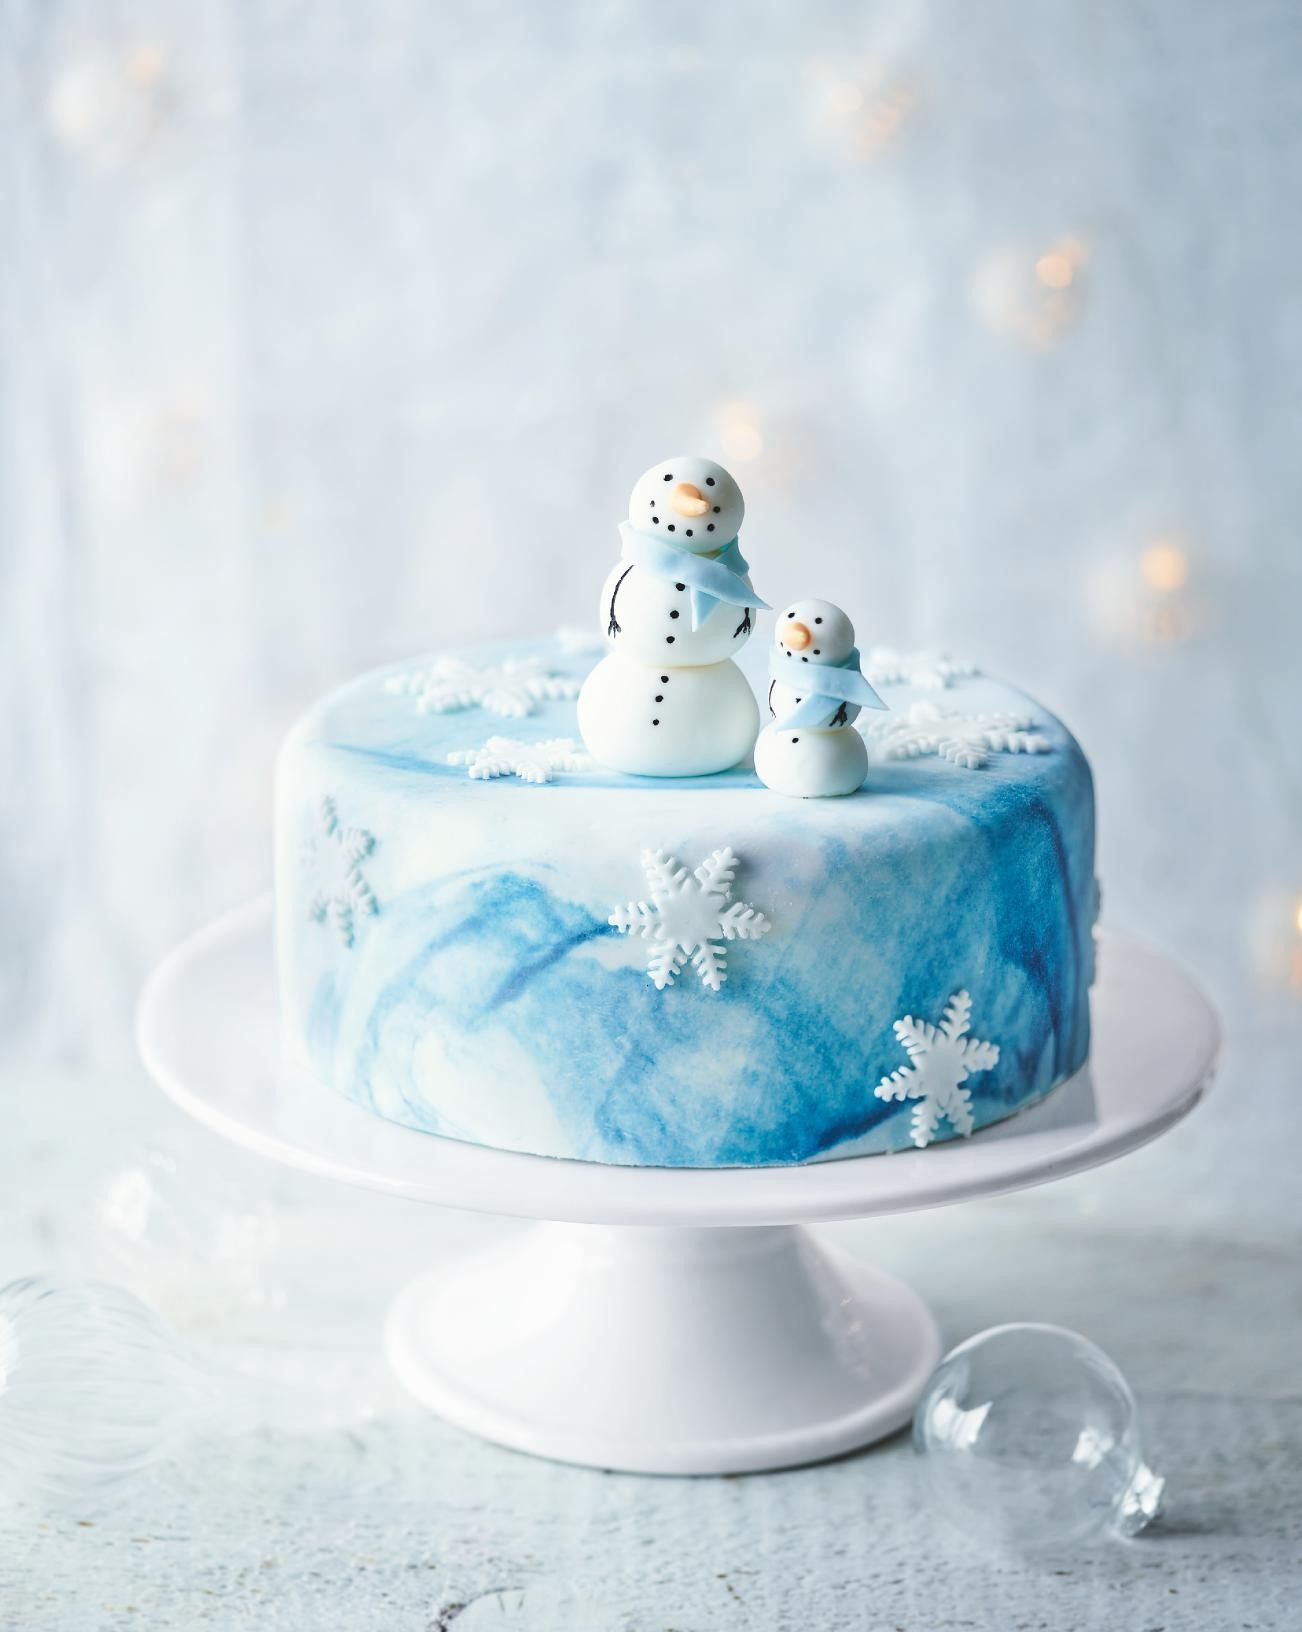 Winter Wonderland Cake Ideas
 How to make a WINTER WONDERLAND CAKE